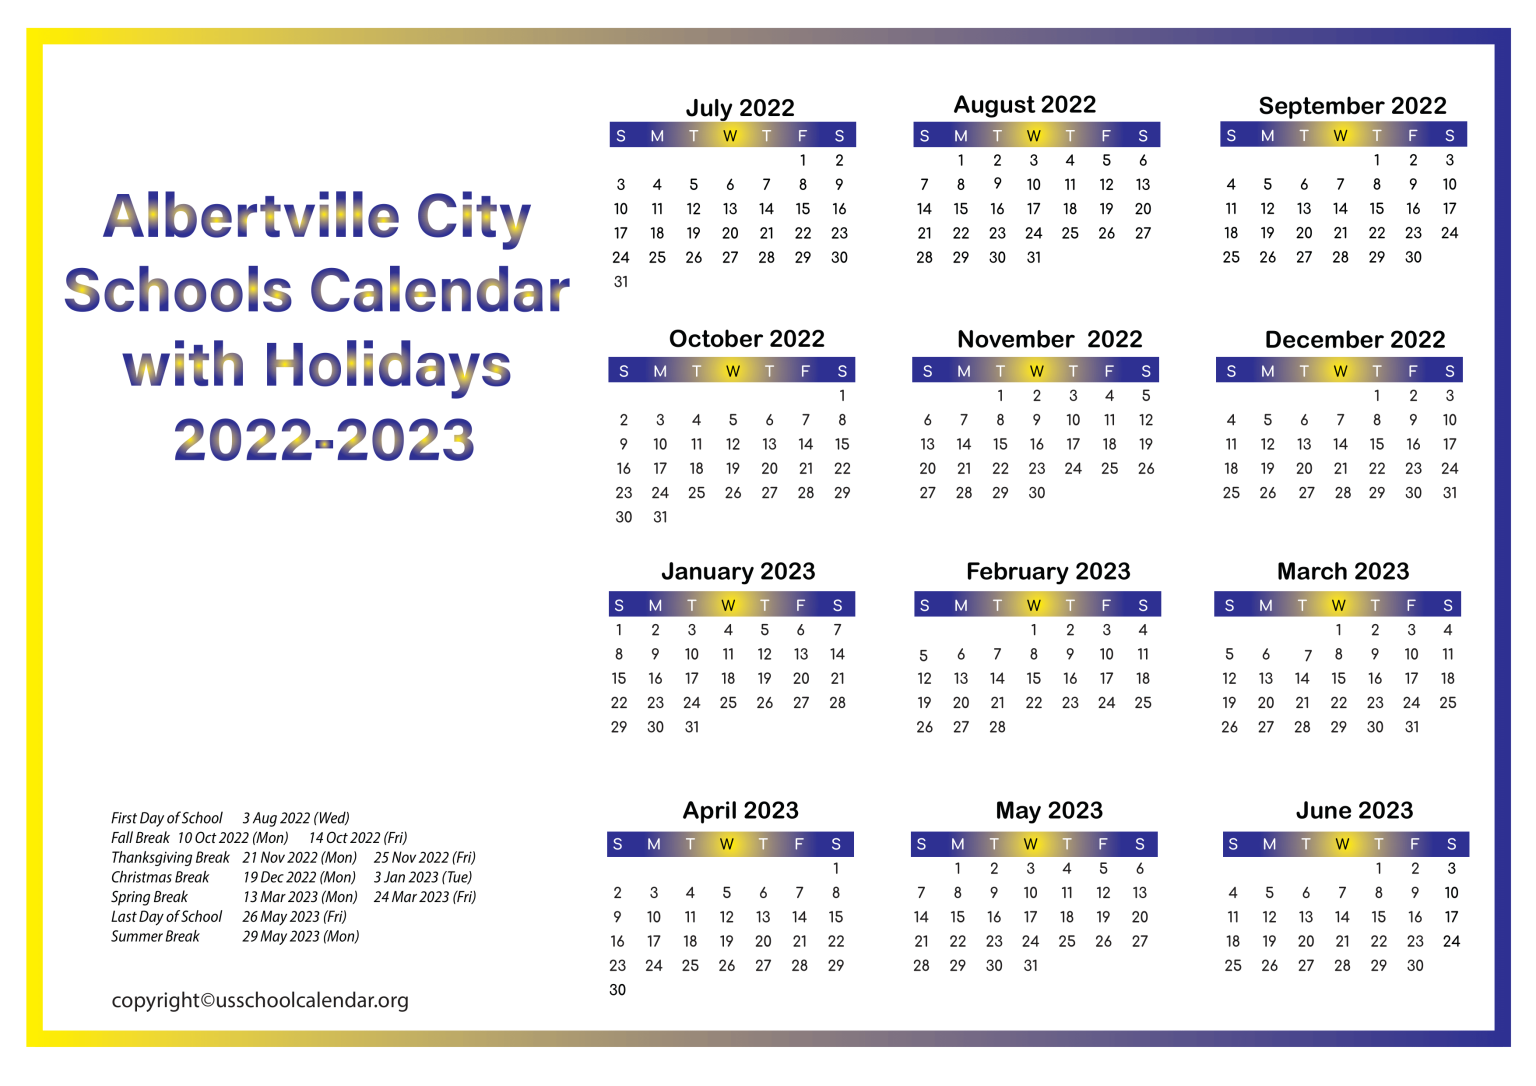 Albertville City Schools Calendar with Holidays 20222023